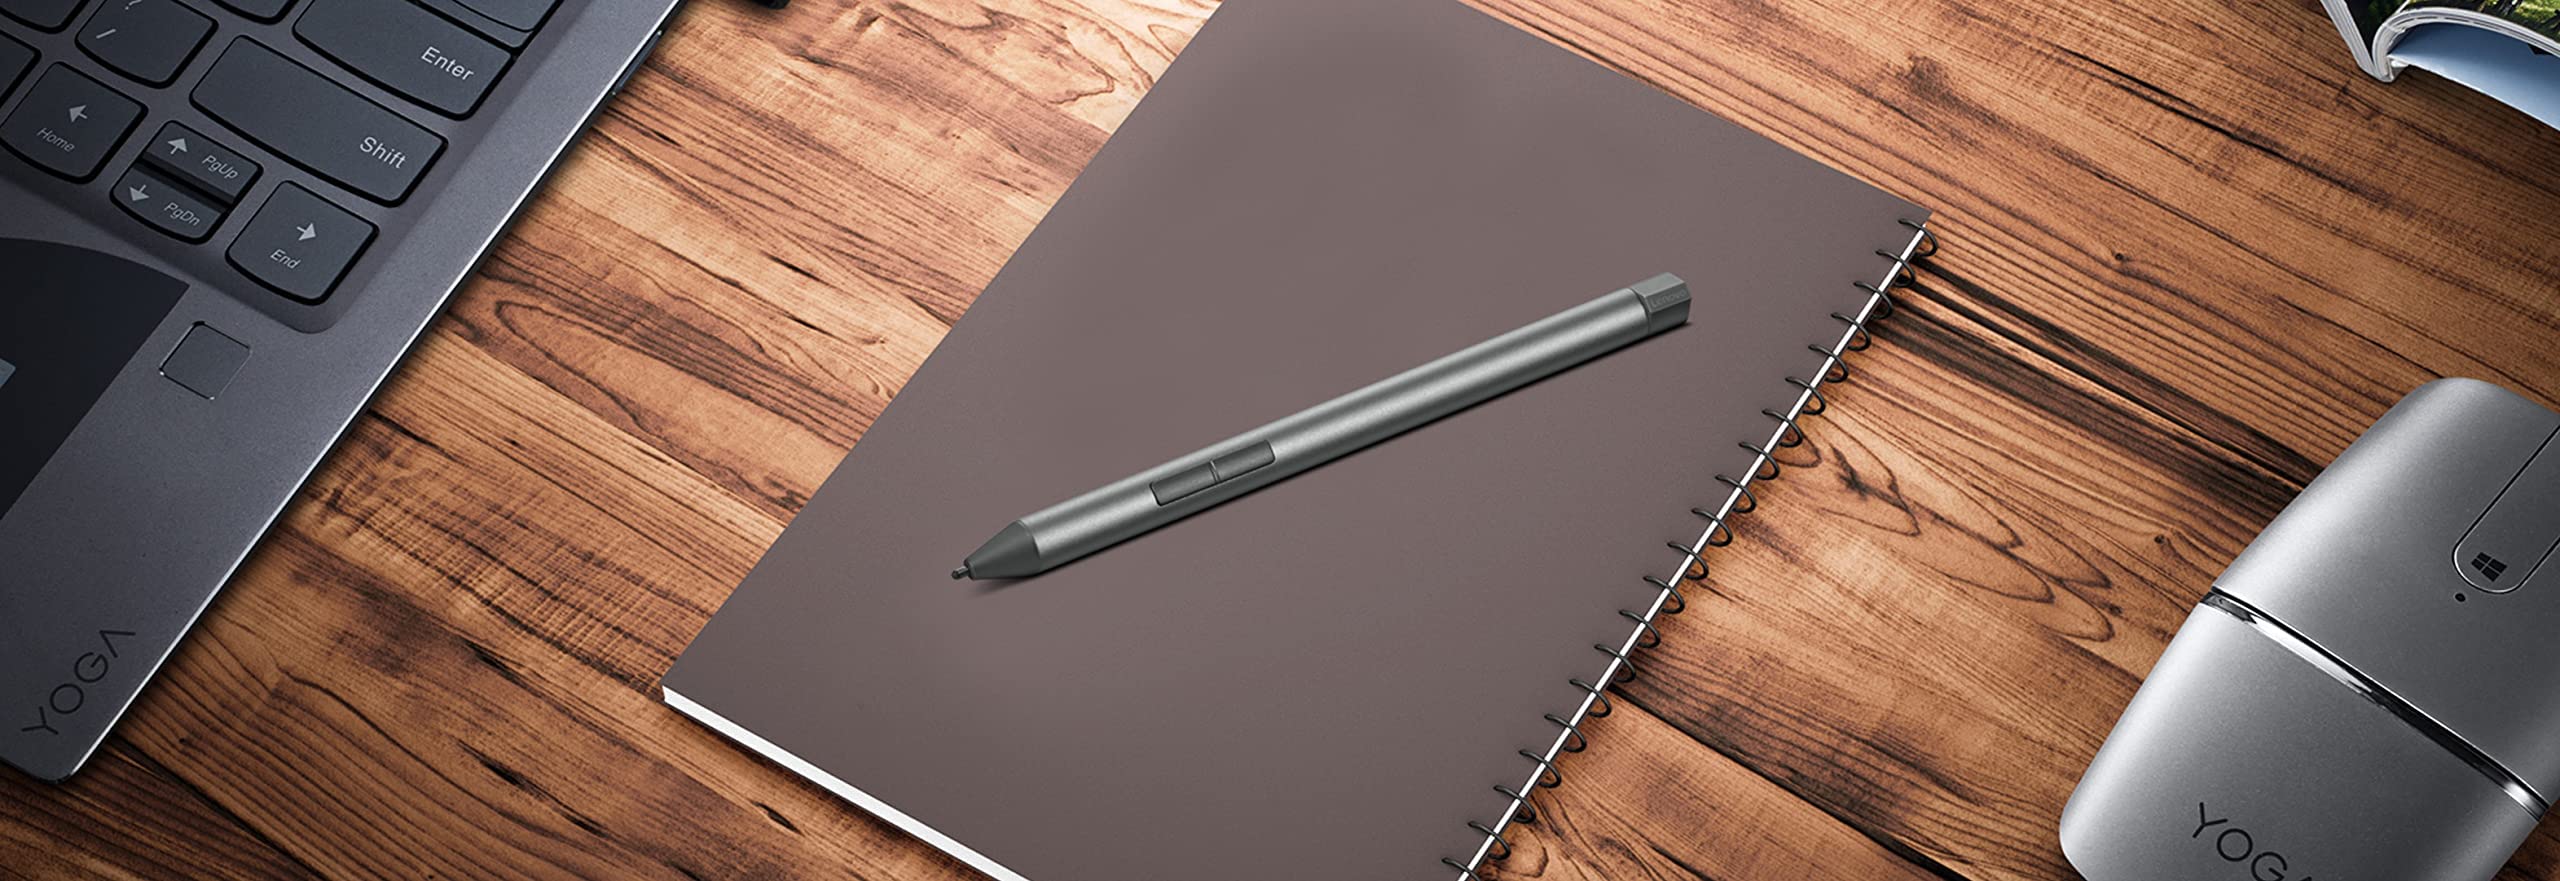 Lenovo Digital Pen 2 (Laptop) - Ultra-Tactile Response - 4,096 Levels of Pressure - Natural Feel Elastometer Pen Tip - Extended Battery Life - Silver, Grey